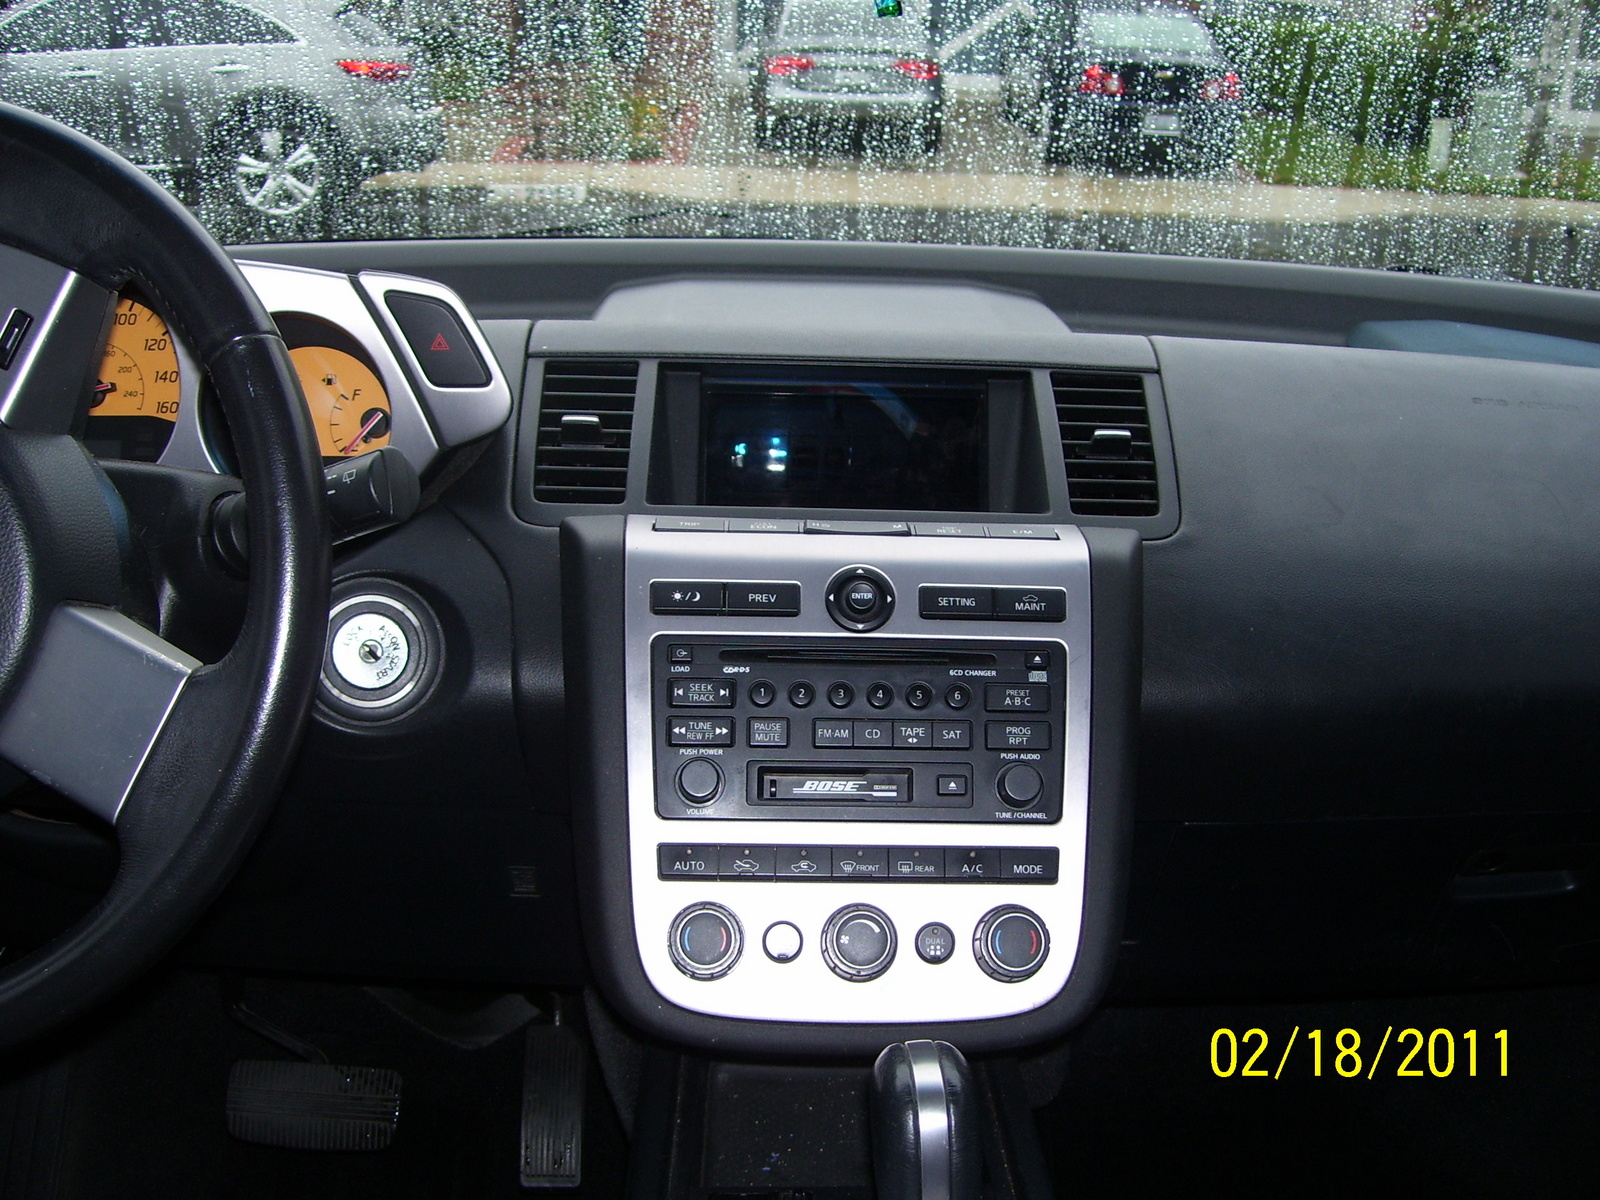 2003 Nissan murano interior photos #9